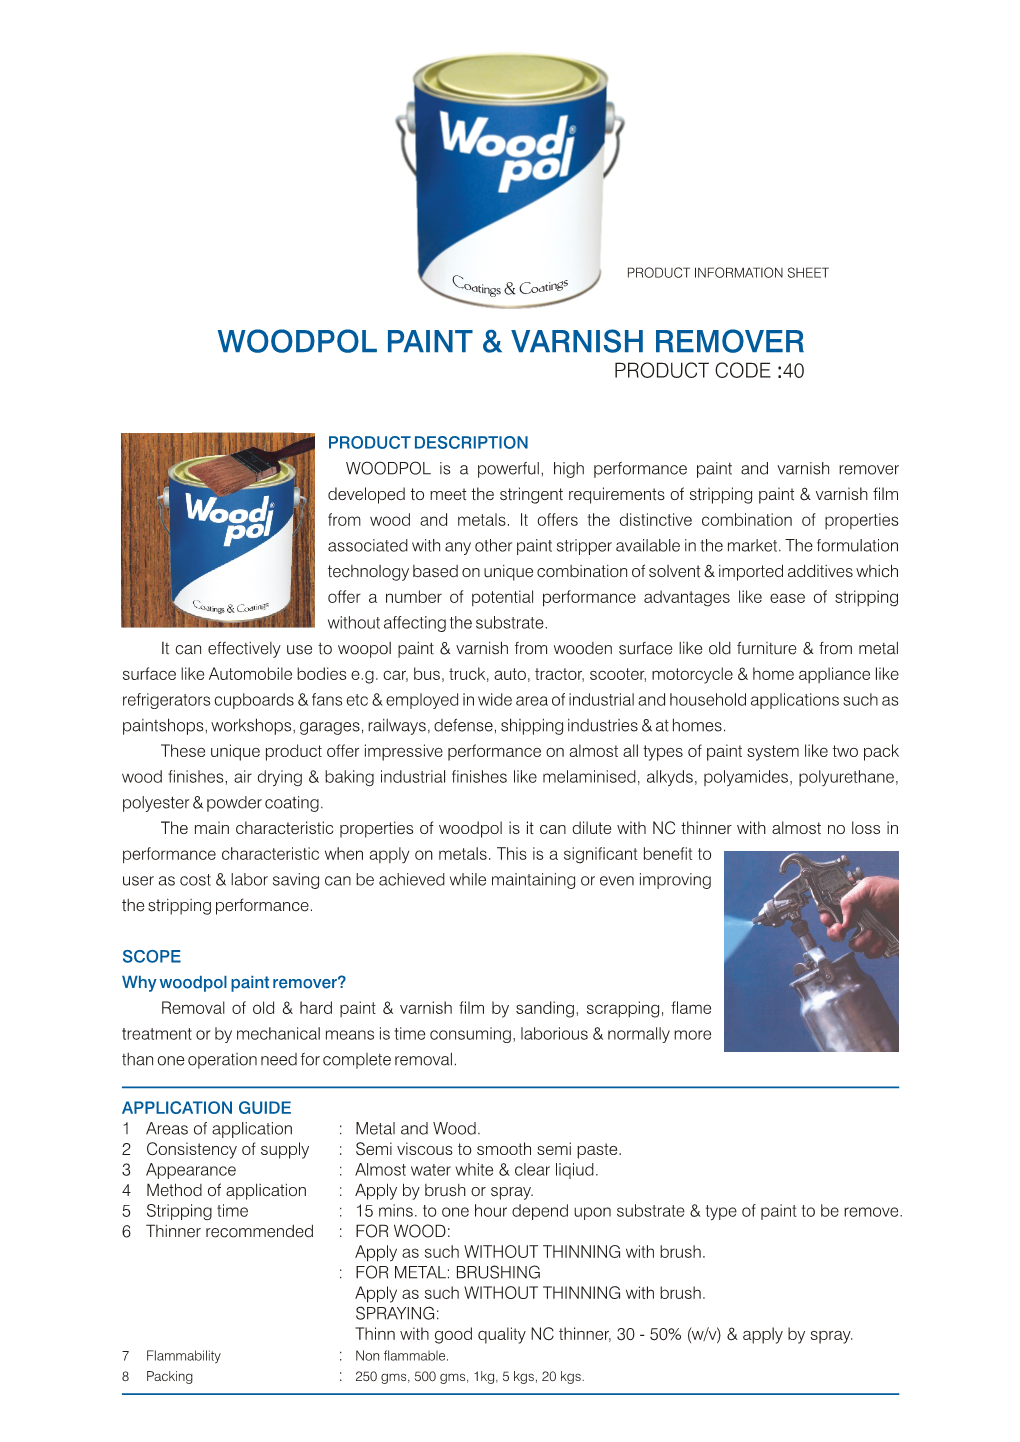 Woodpol Paint & Varnish Remover